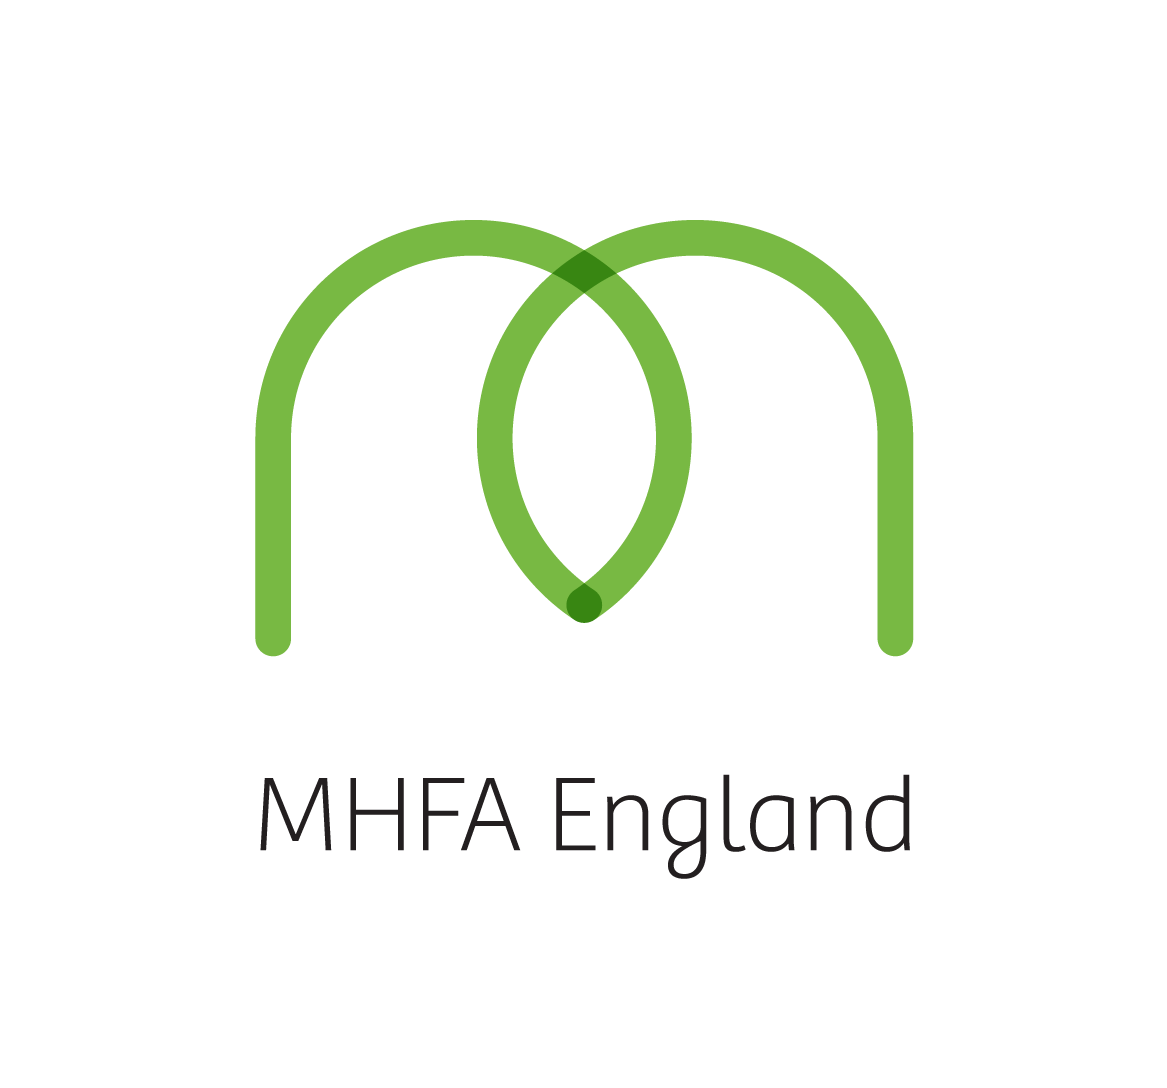 MHFA - Mental Health England First Aid